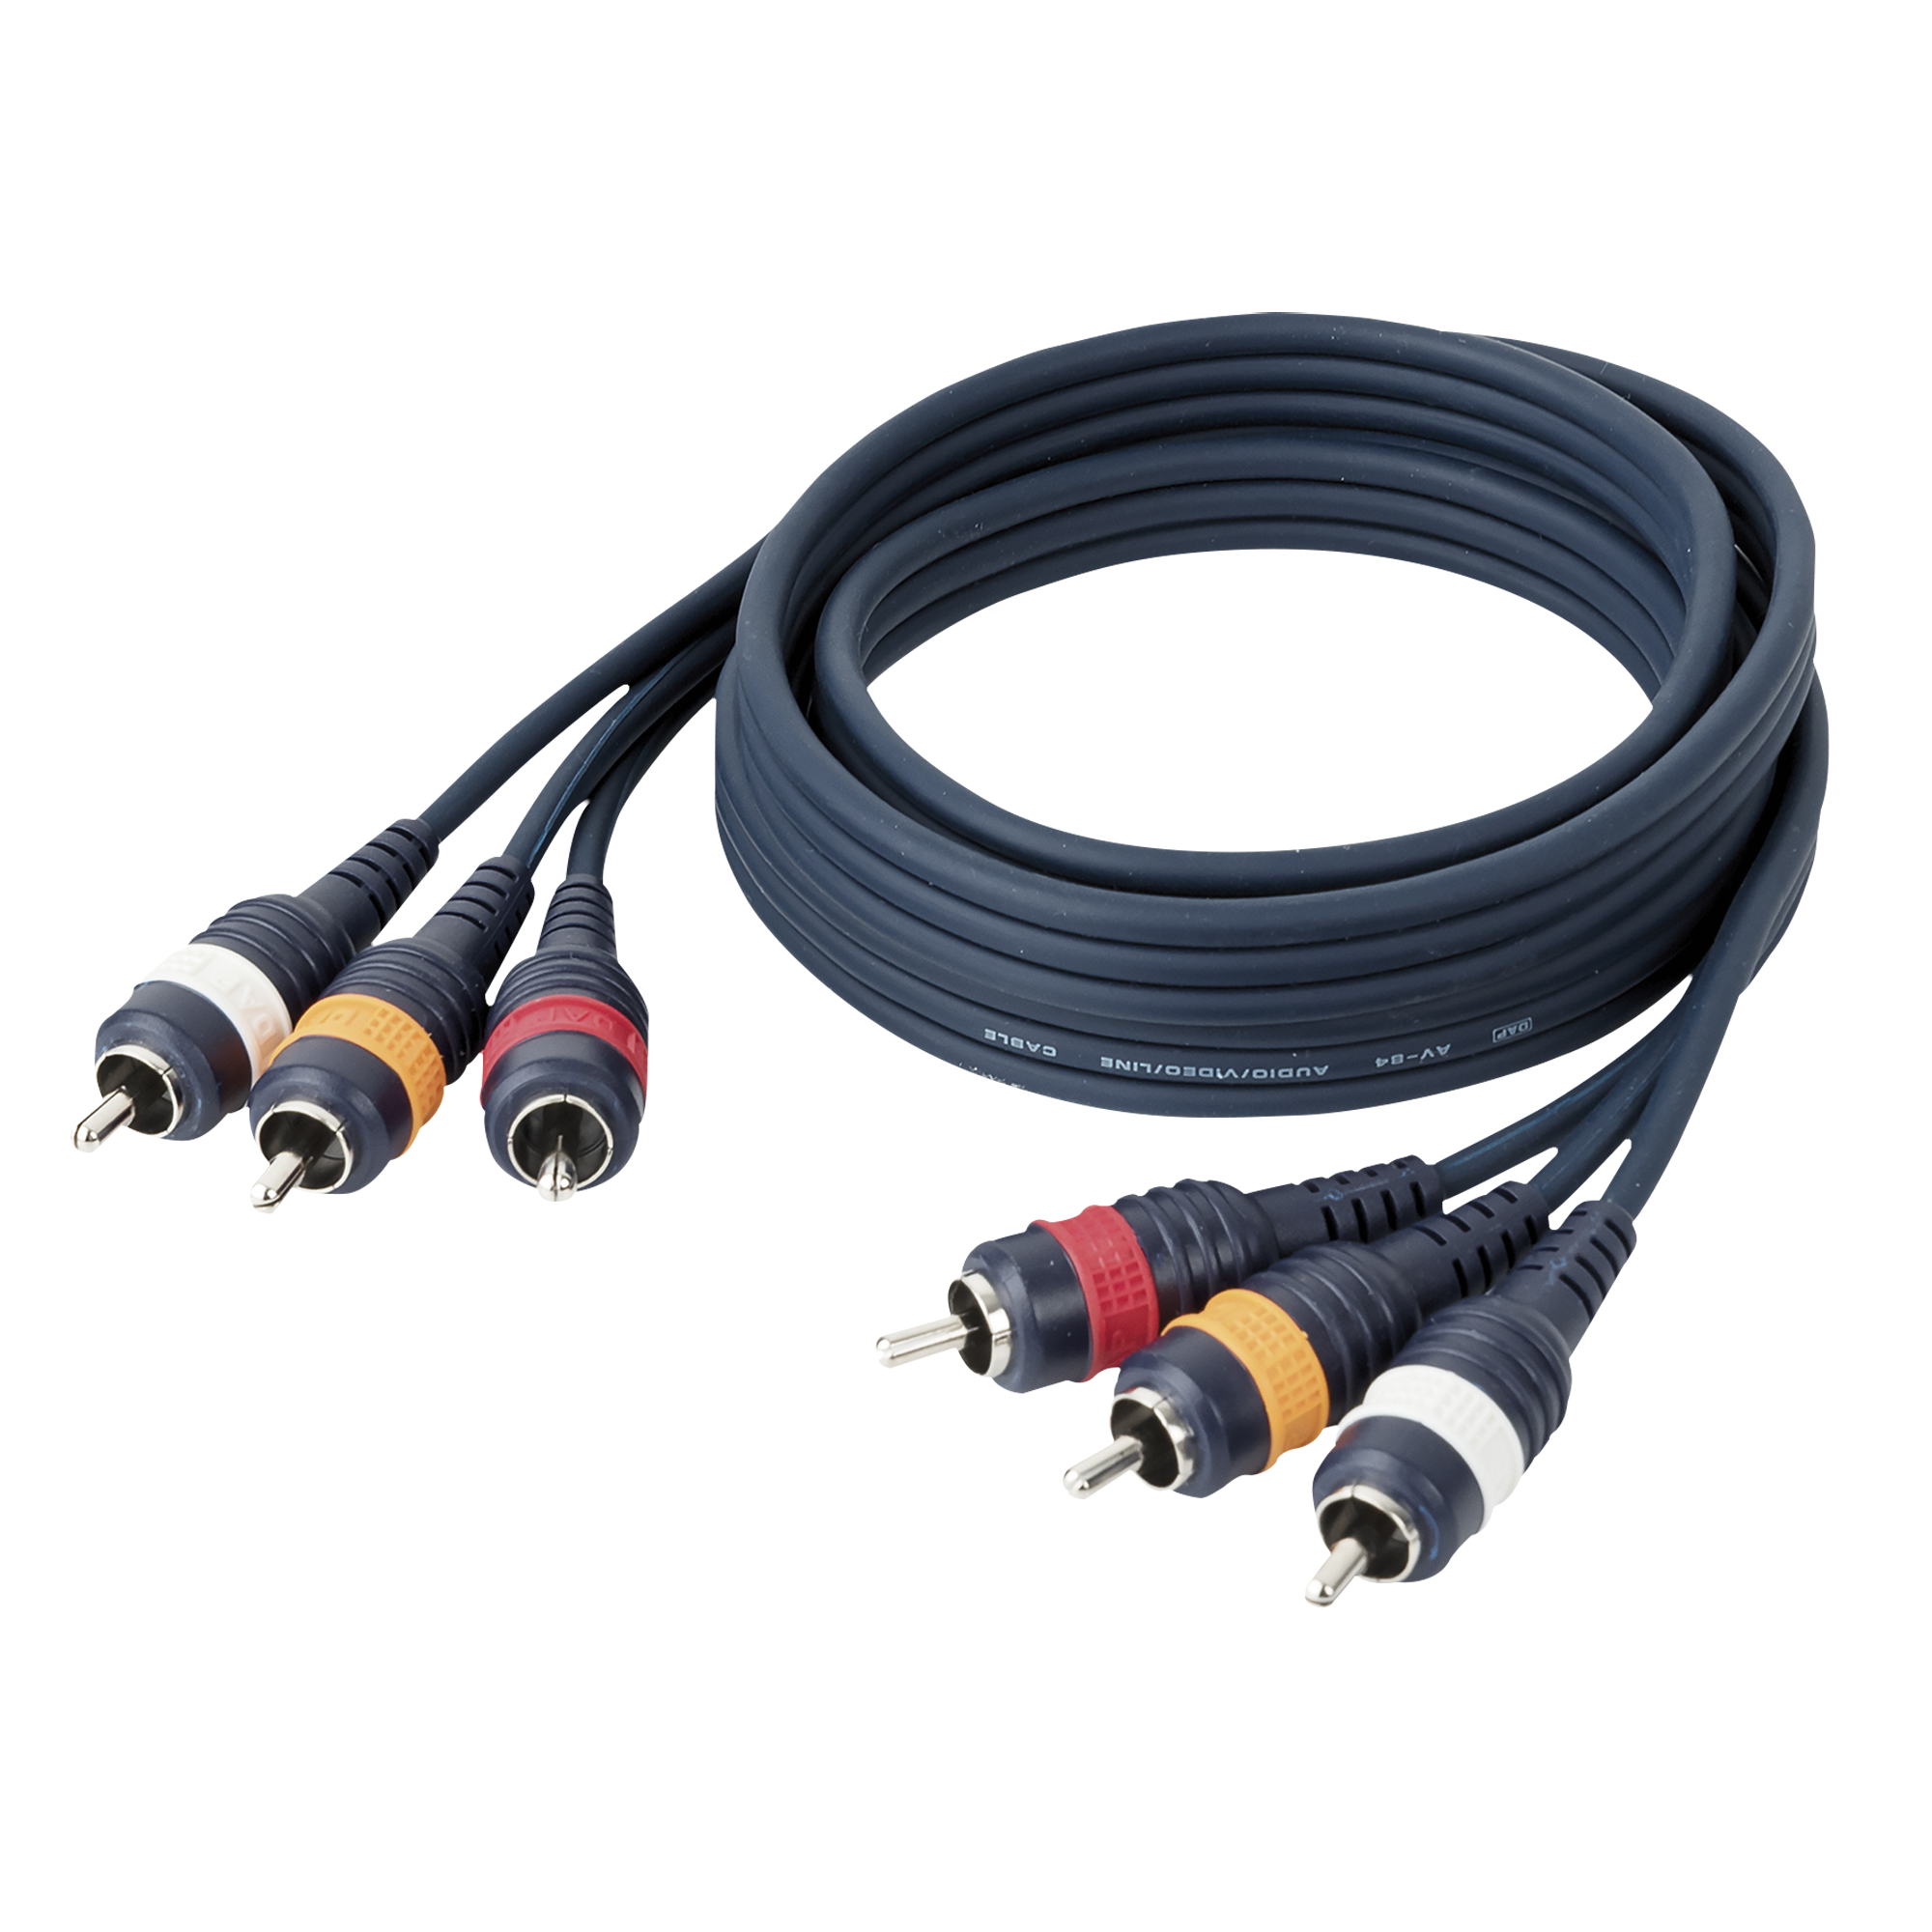 DAP FL47 - 2 x RCA + 1 x Digital cable 1,5m